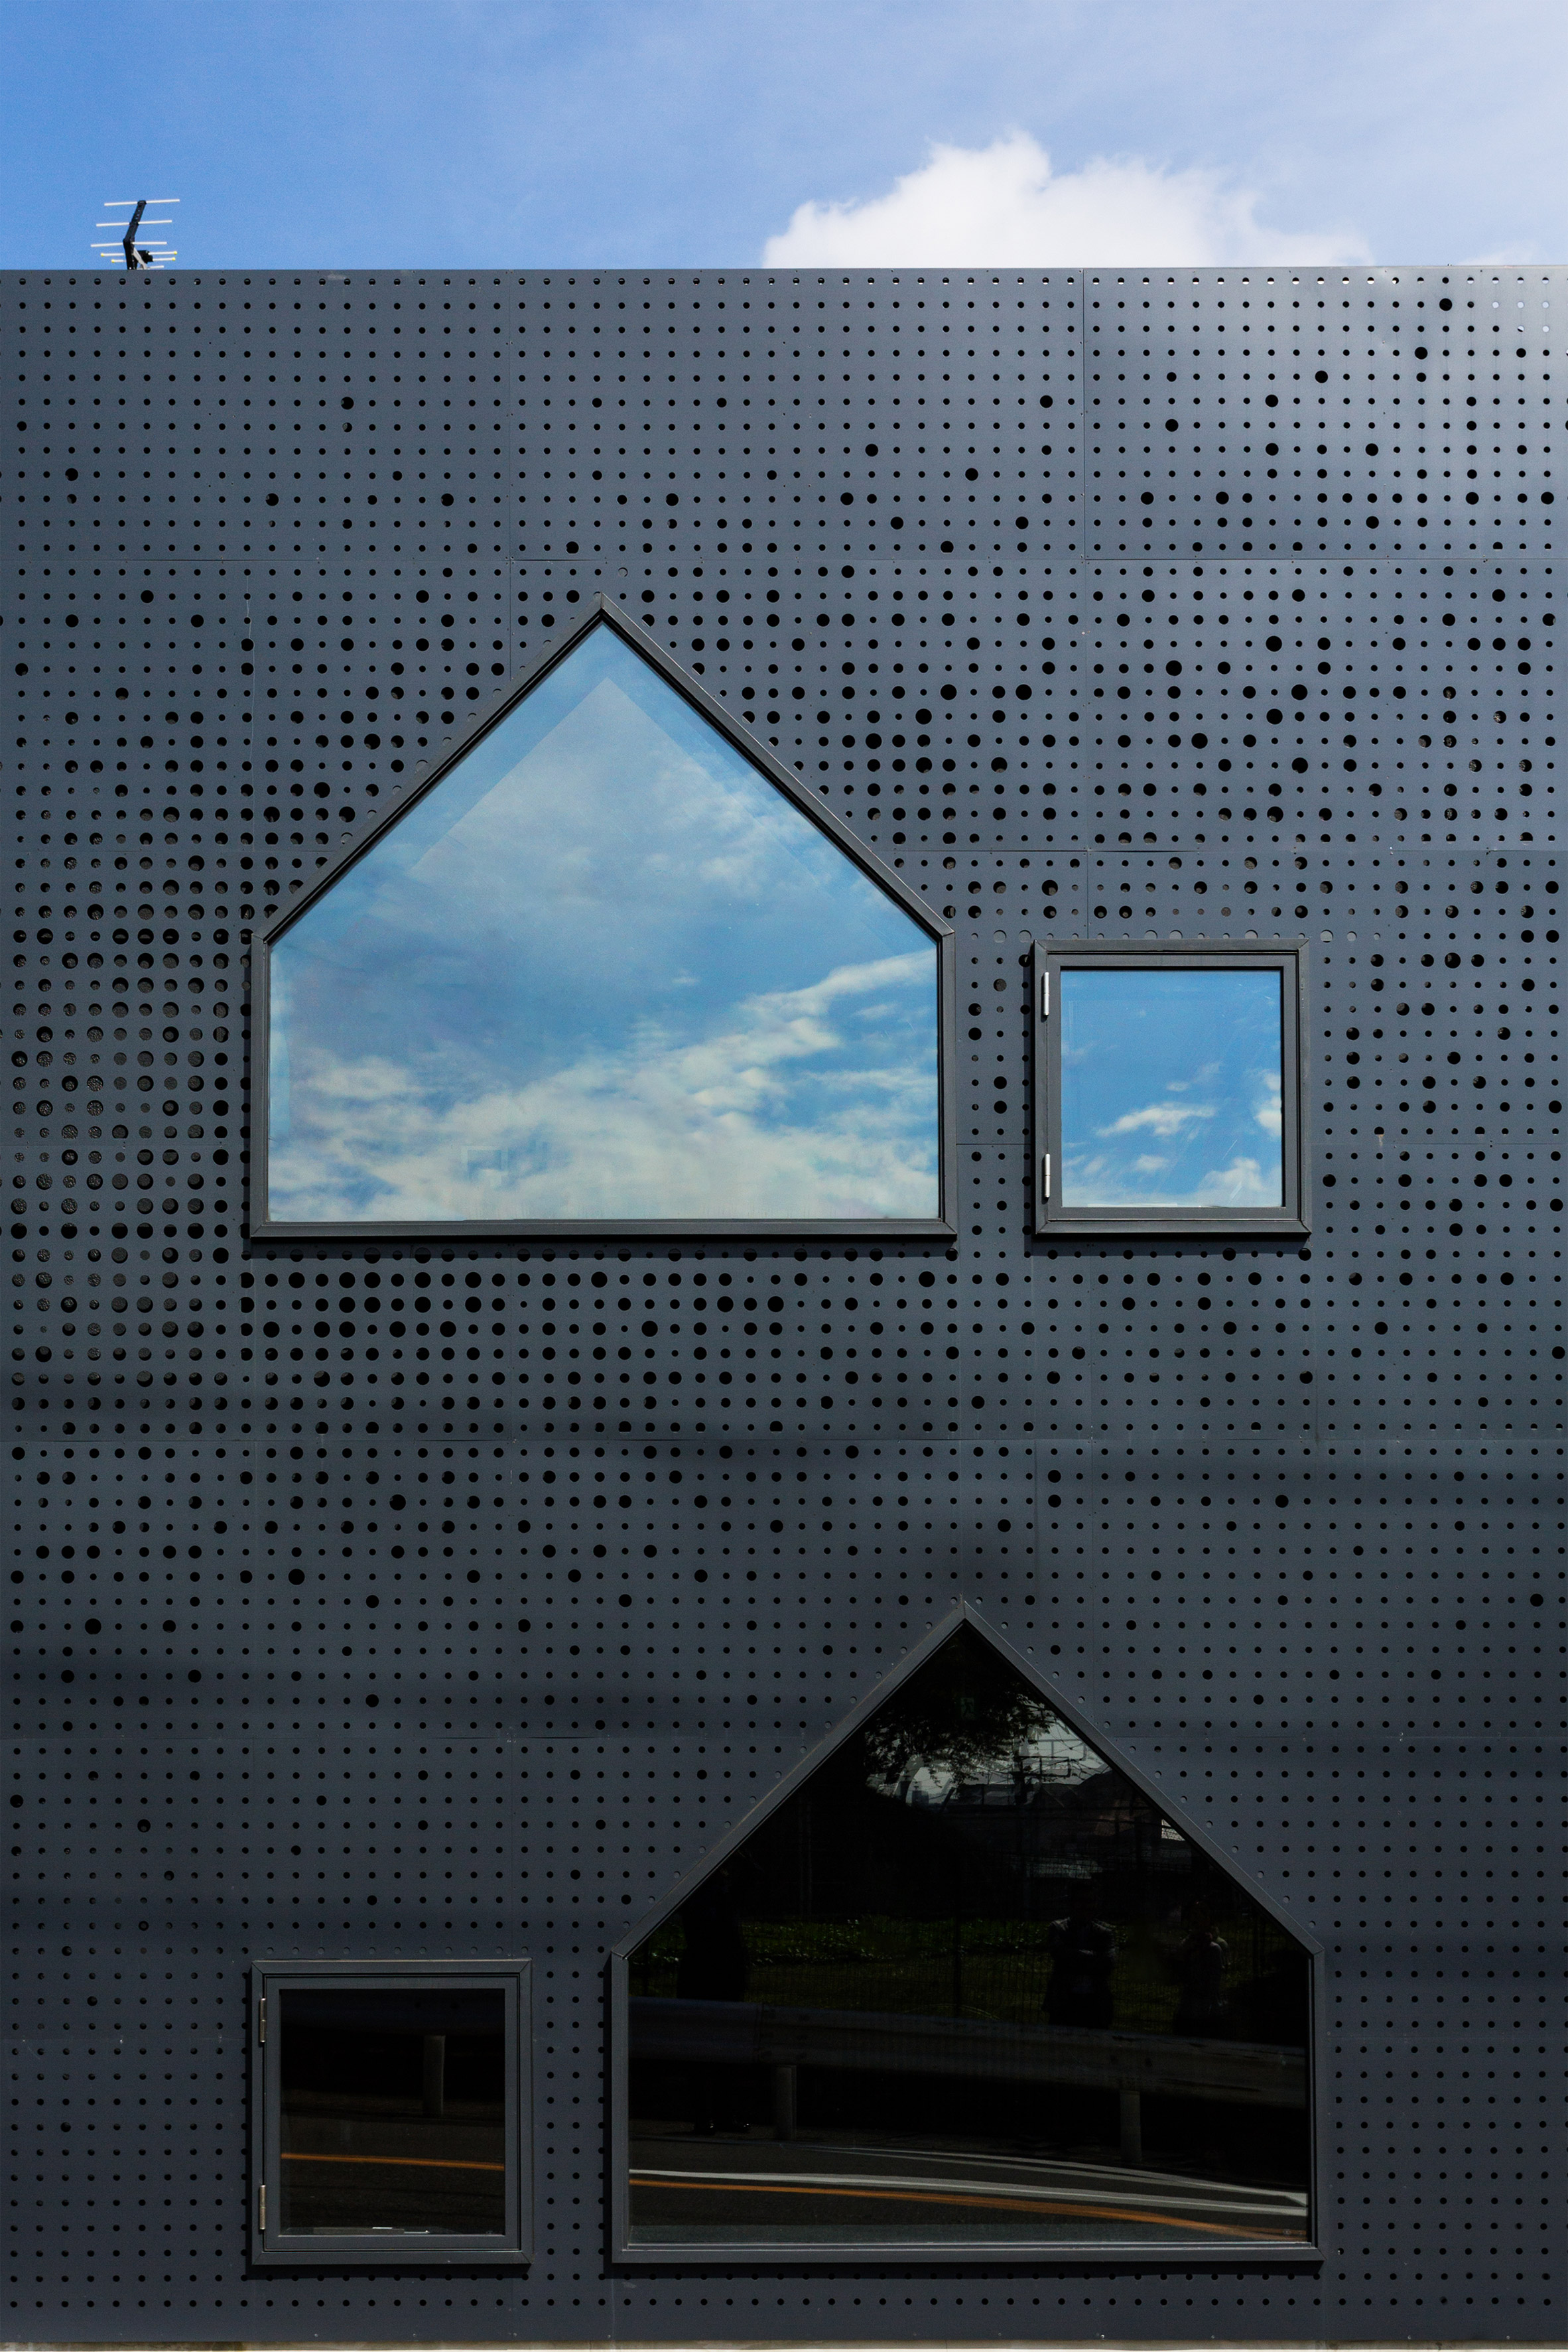 House-shaped windows puncture perforated-metal facades of Yokohama nursery